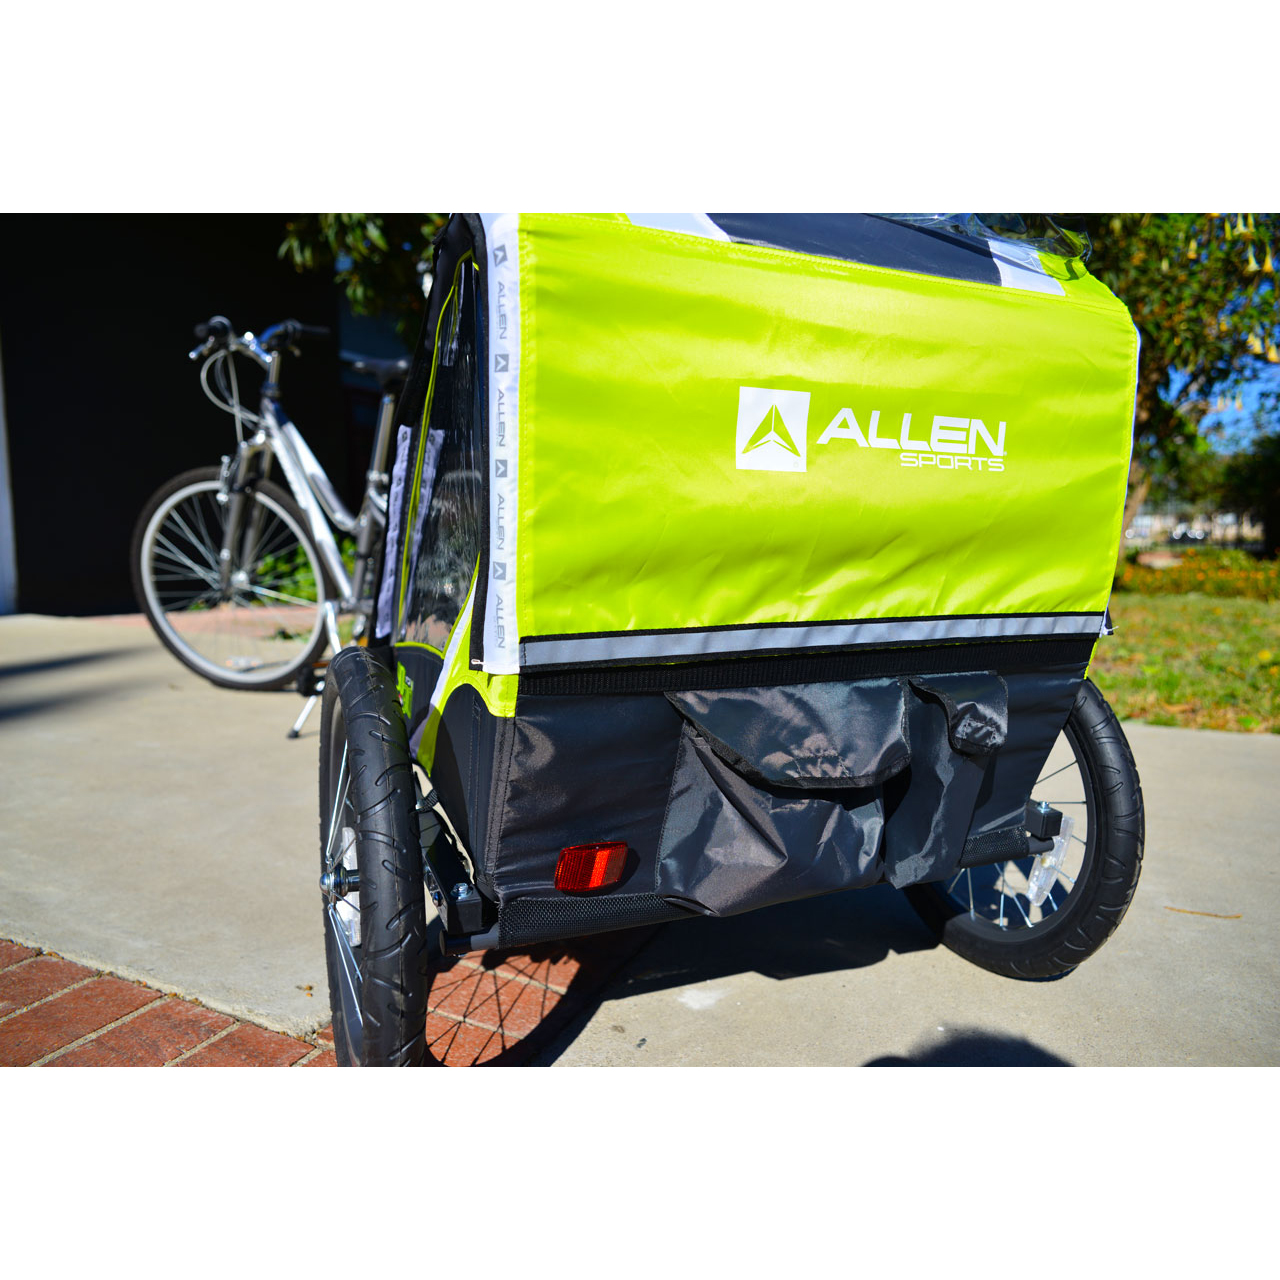 Allen Sports Deluxe 2-Child Bike Trailer - Green - image 4 of 8